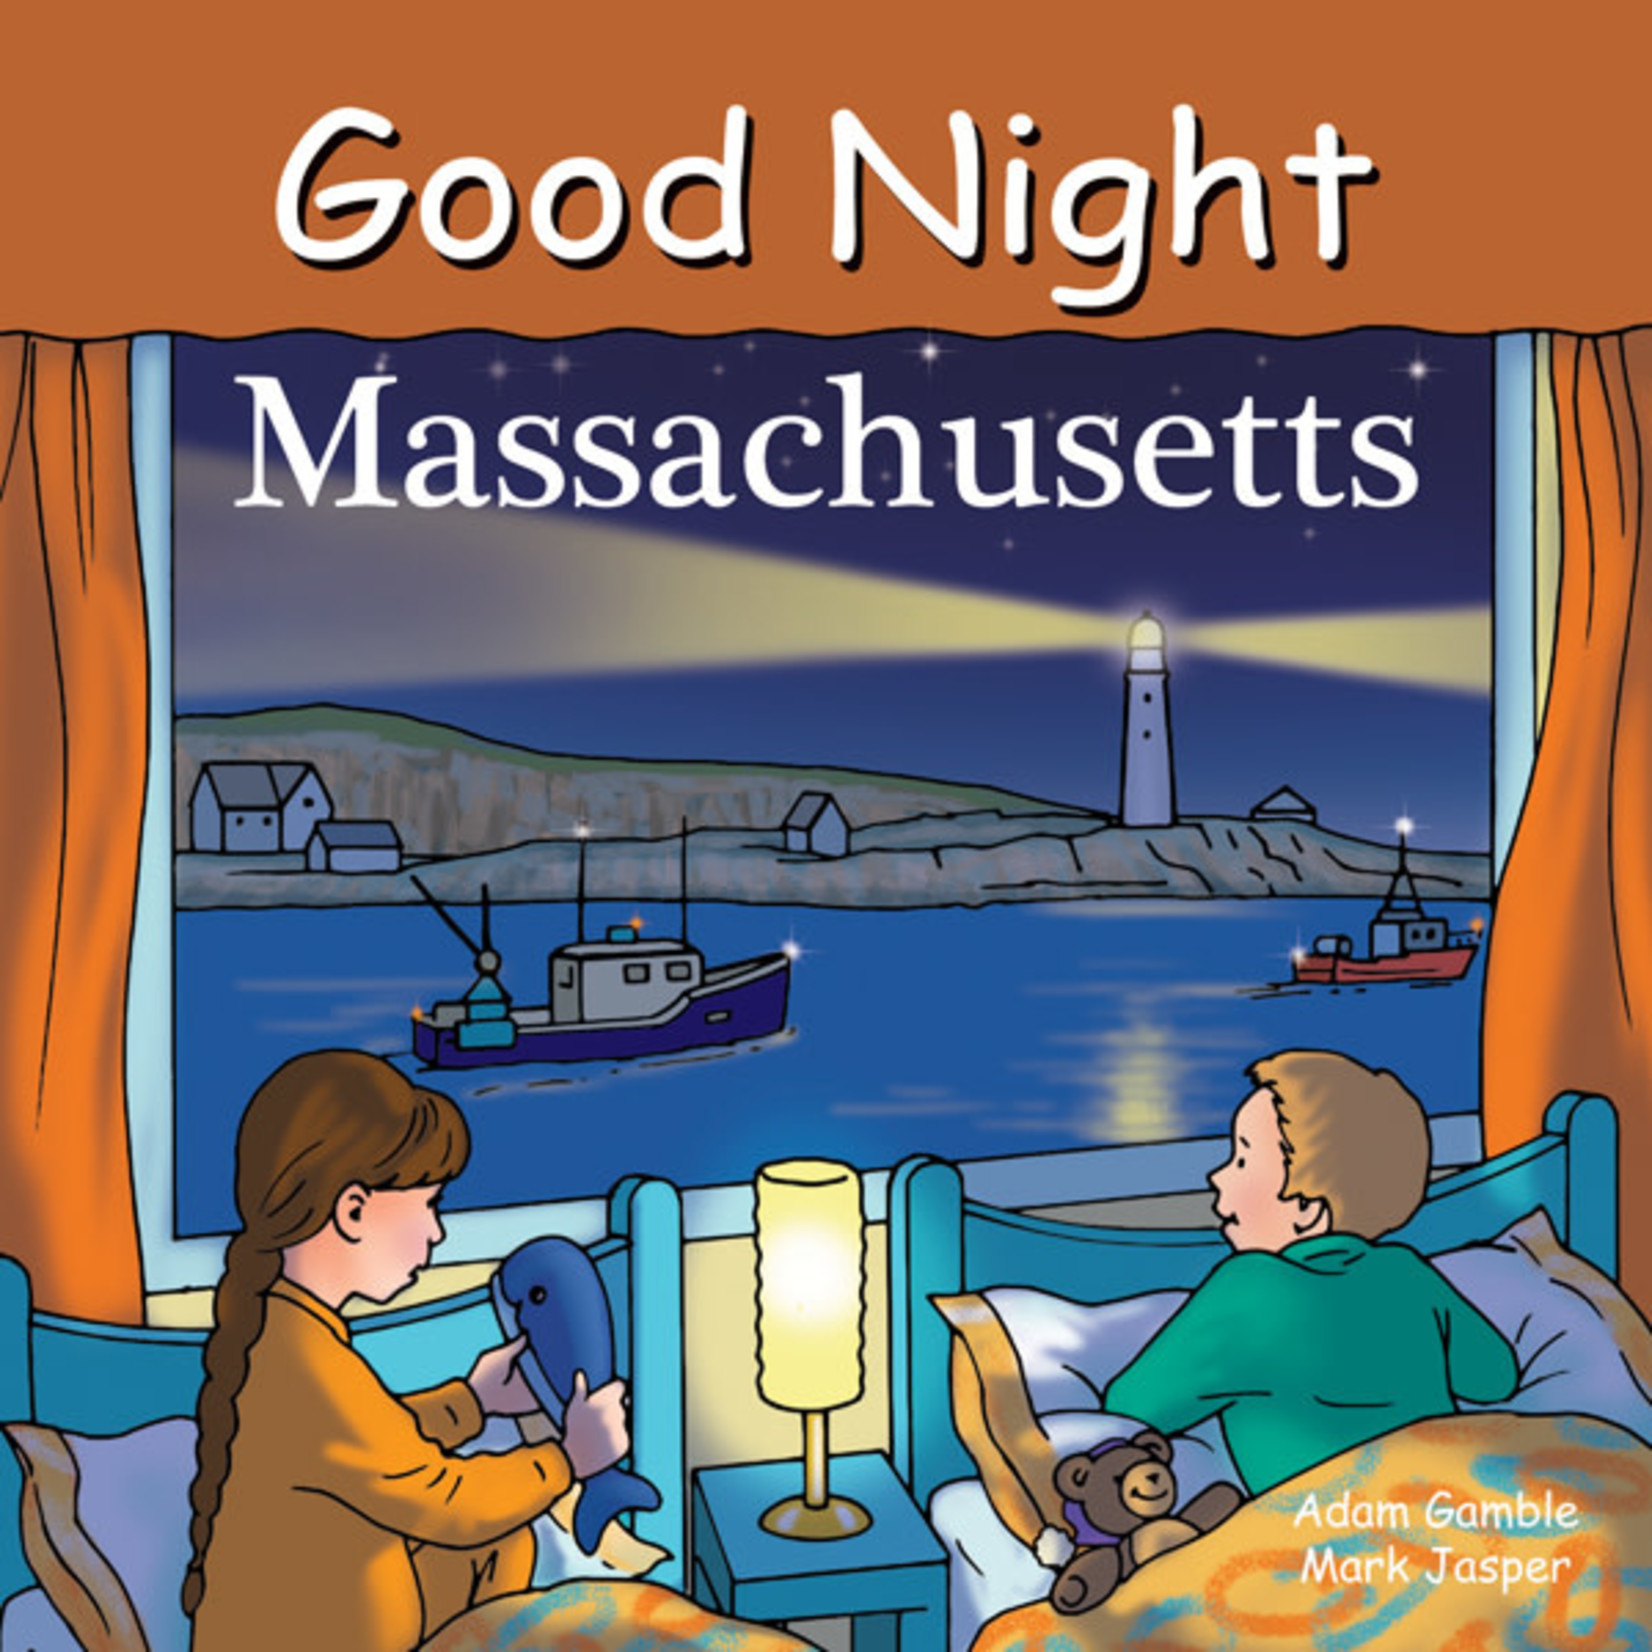 Penguin Random House LLC Good Night Books - States